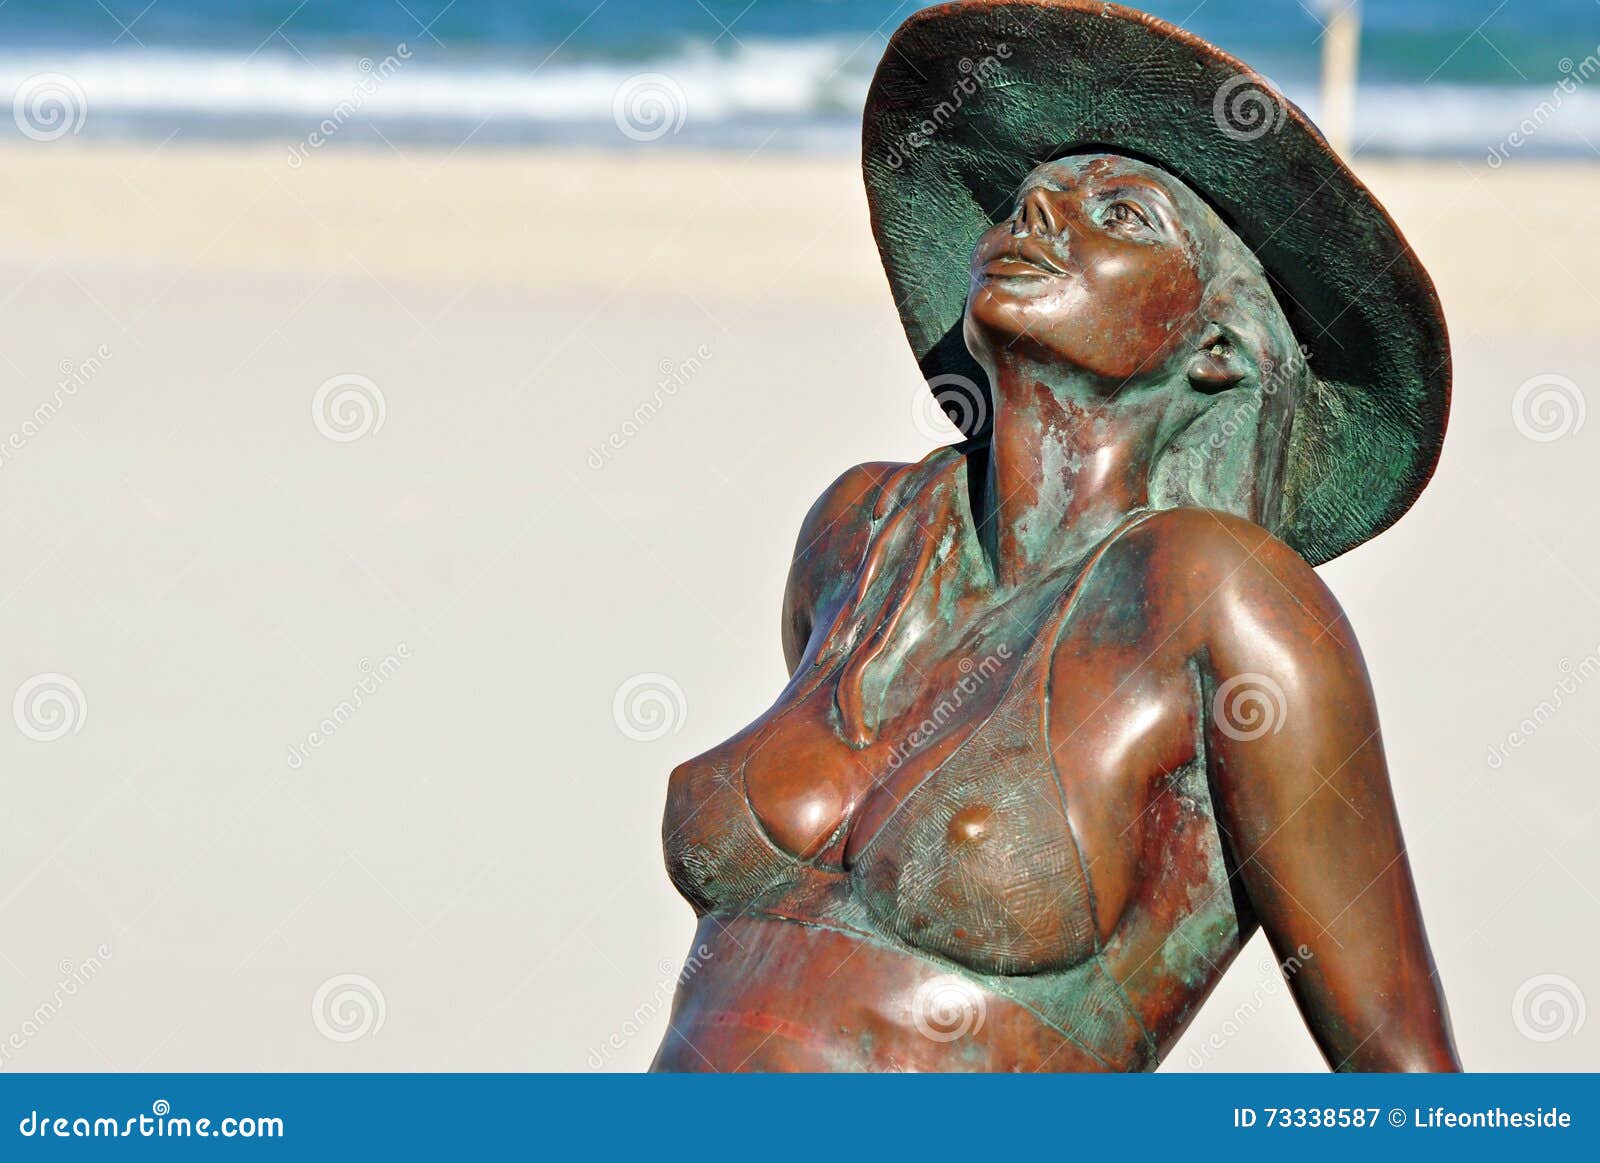 nude girlfriend on the beach